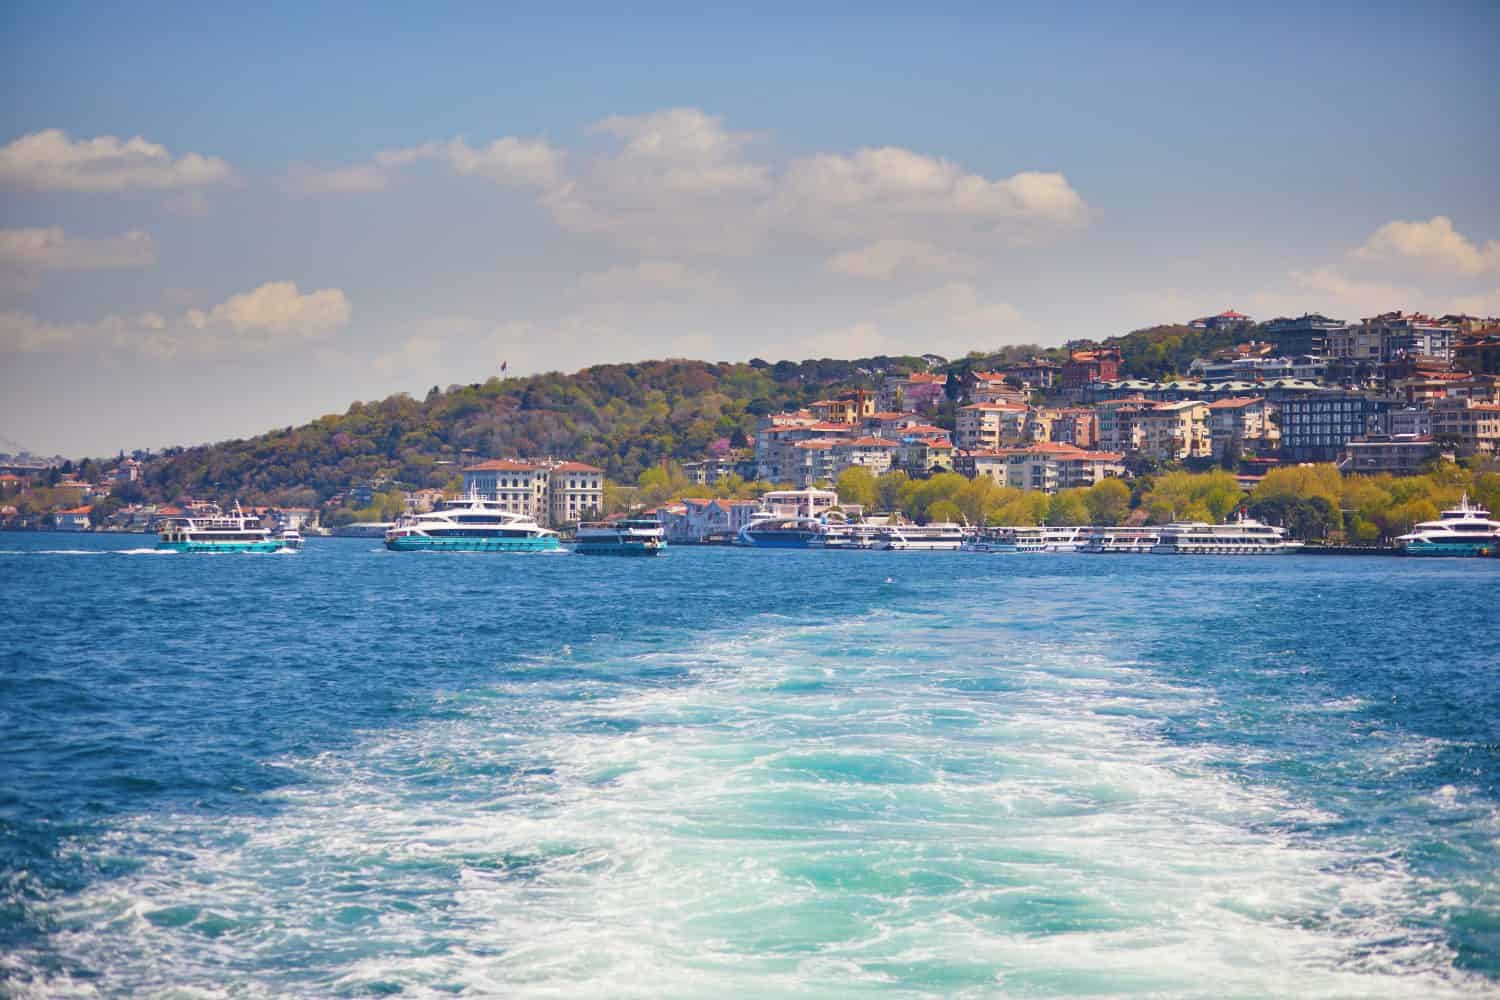 Scenic city view across the Bosphorus strait in Istanbul, Turkey